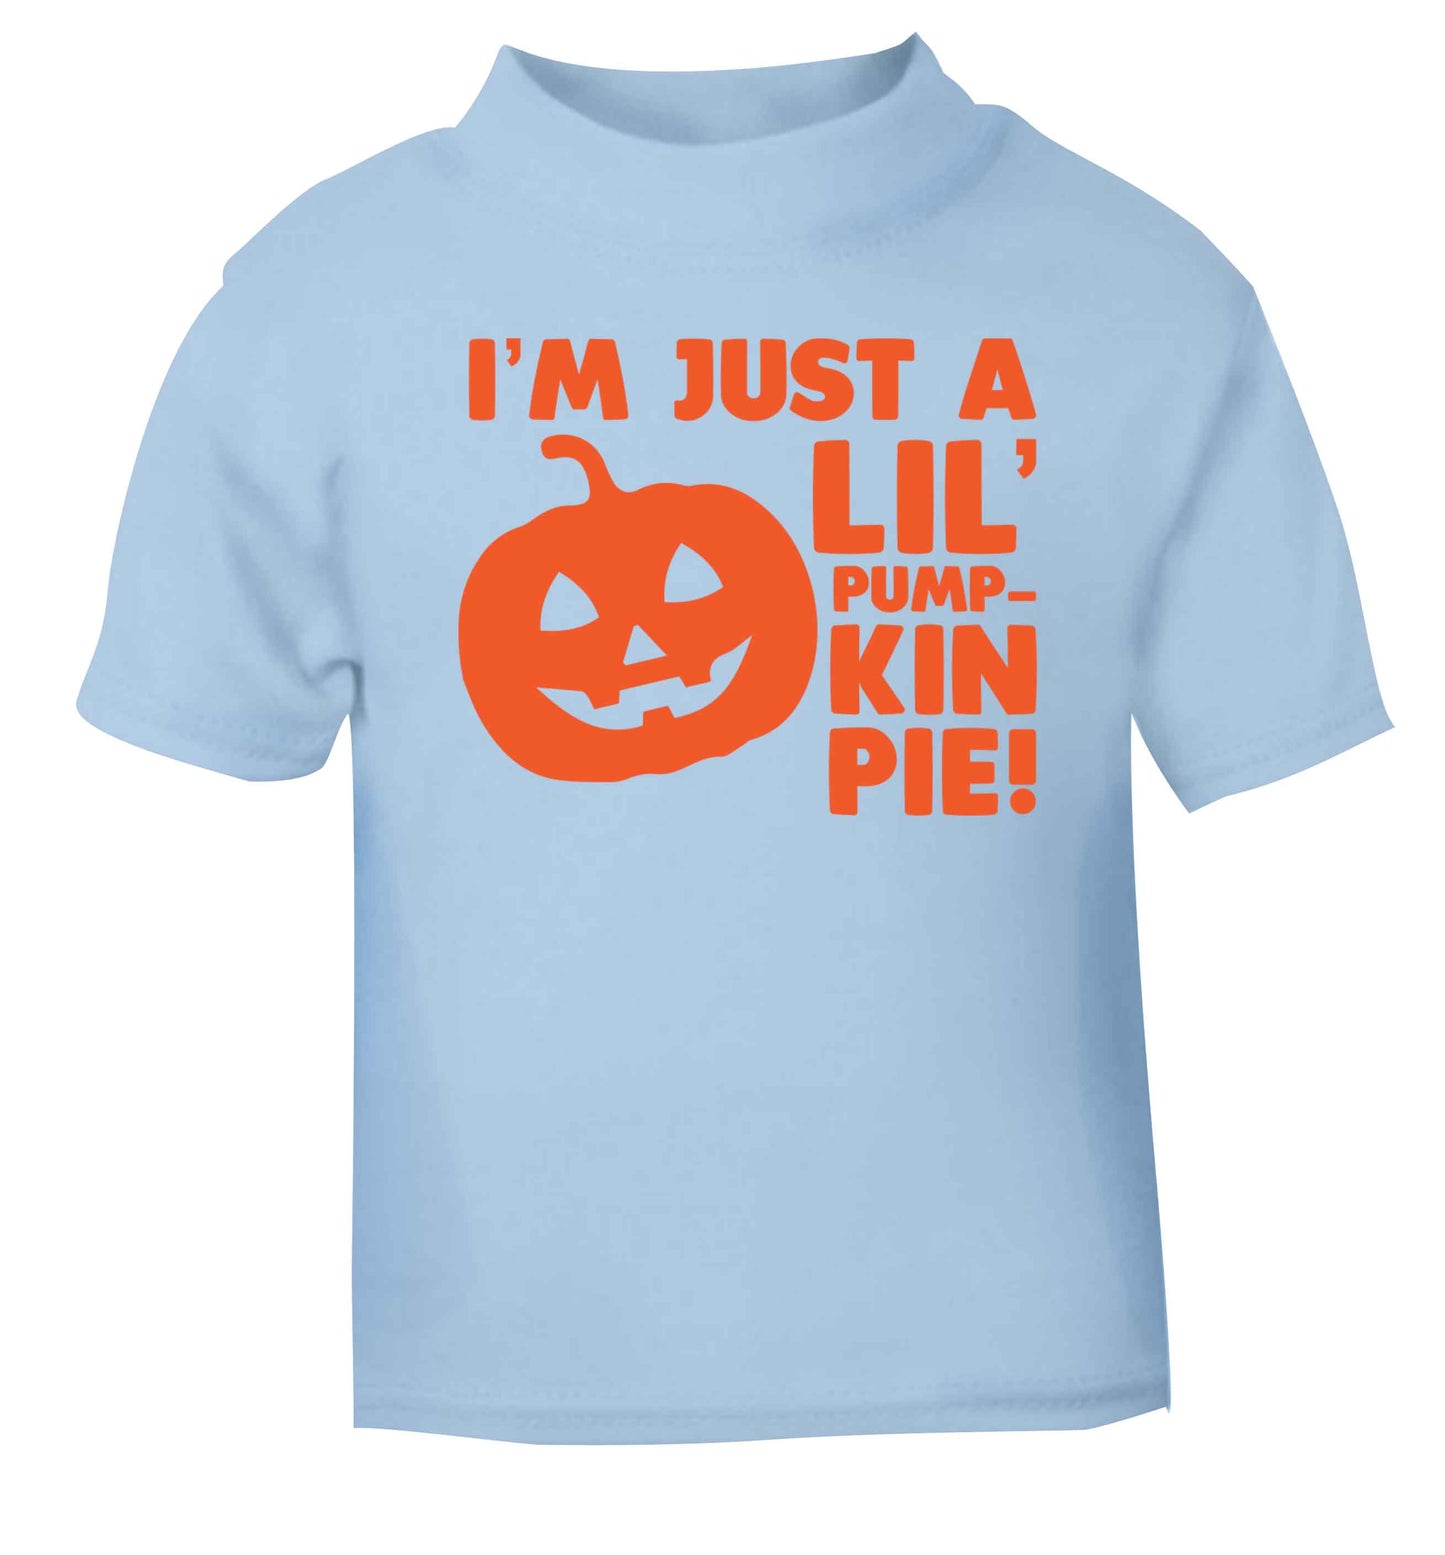 I'm just a lil' pumpkin pie light blue baby toddler Tshirt 2 Years